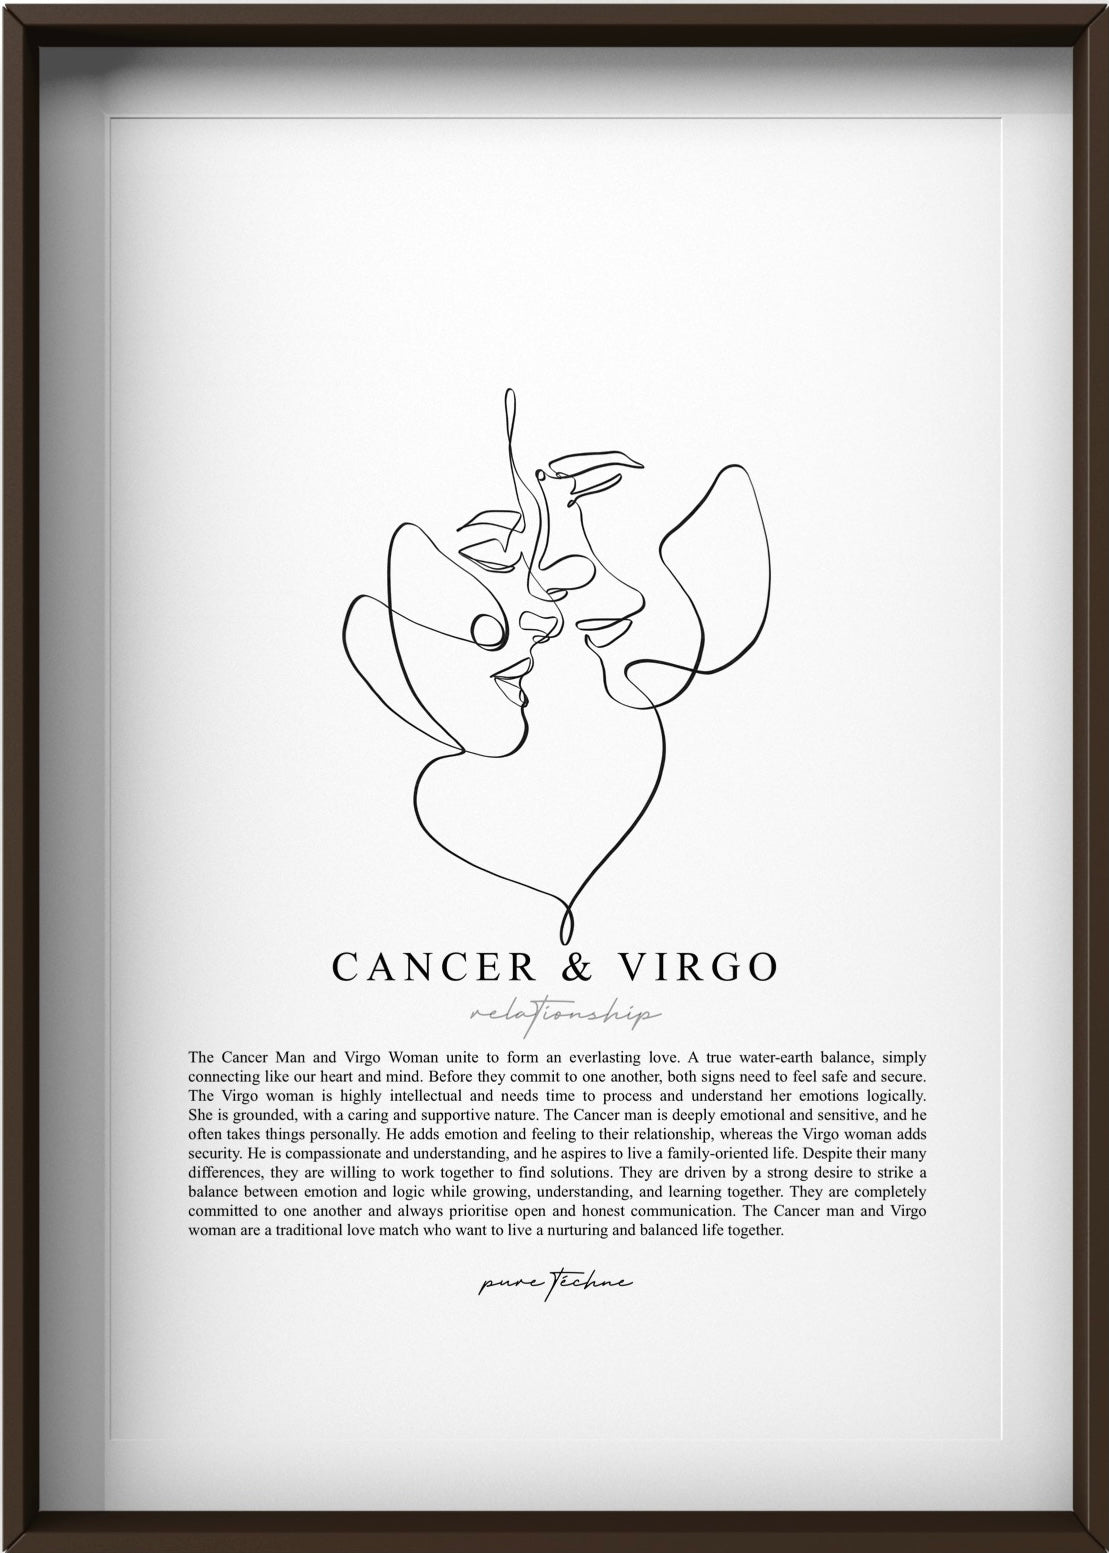 Cancer Man & Virgo Woman